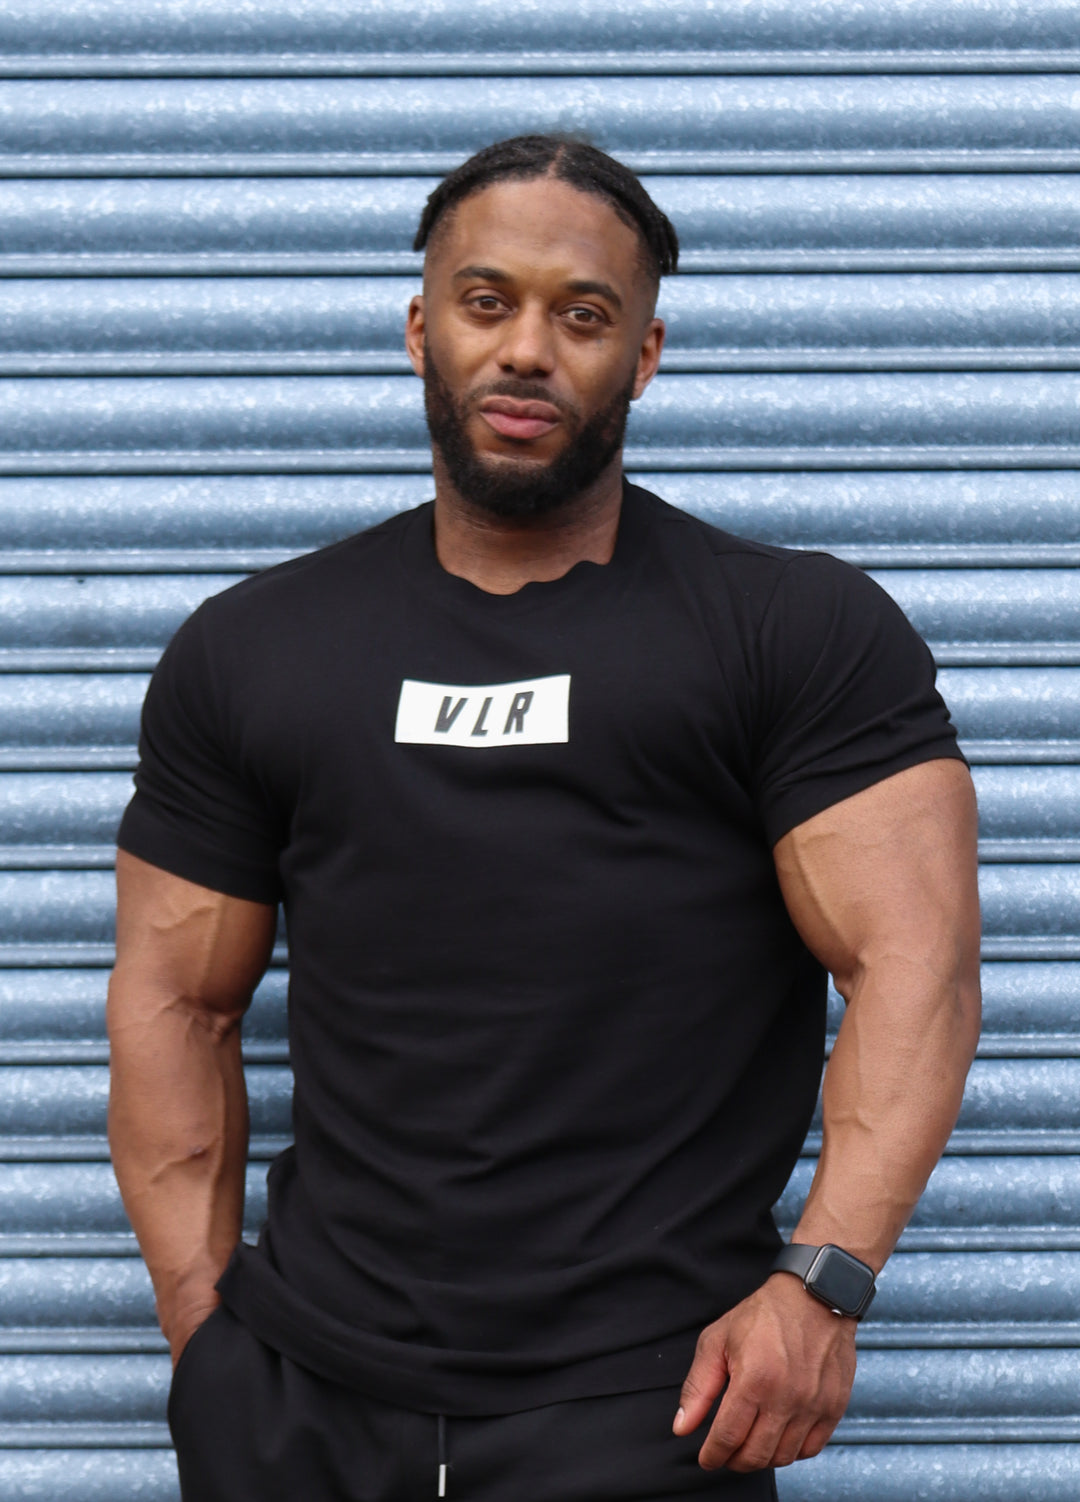 bodybuilder in black valour shirt